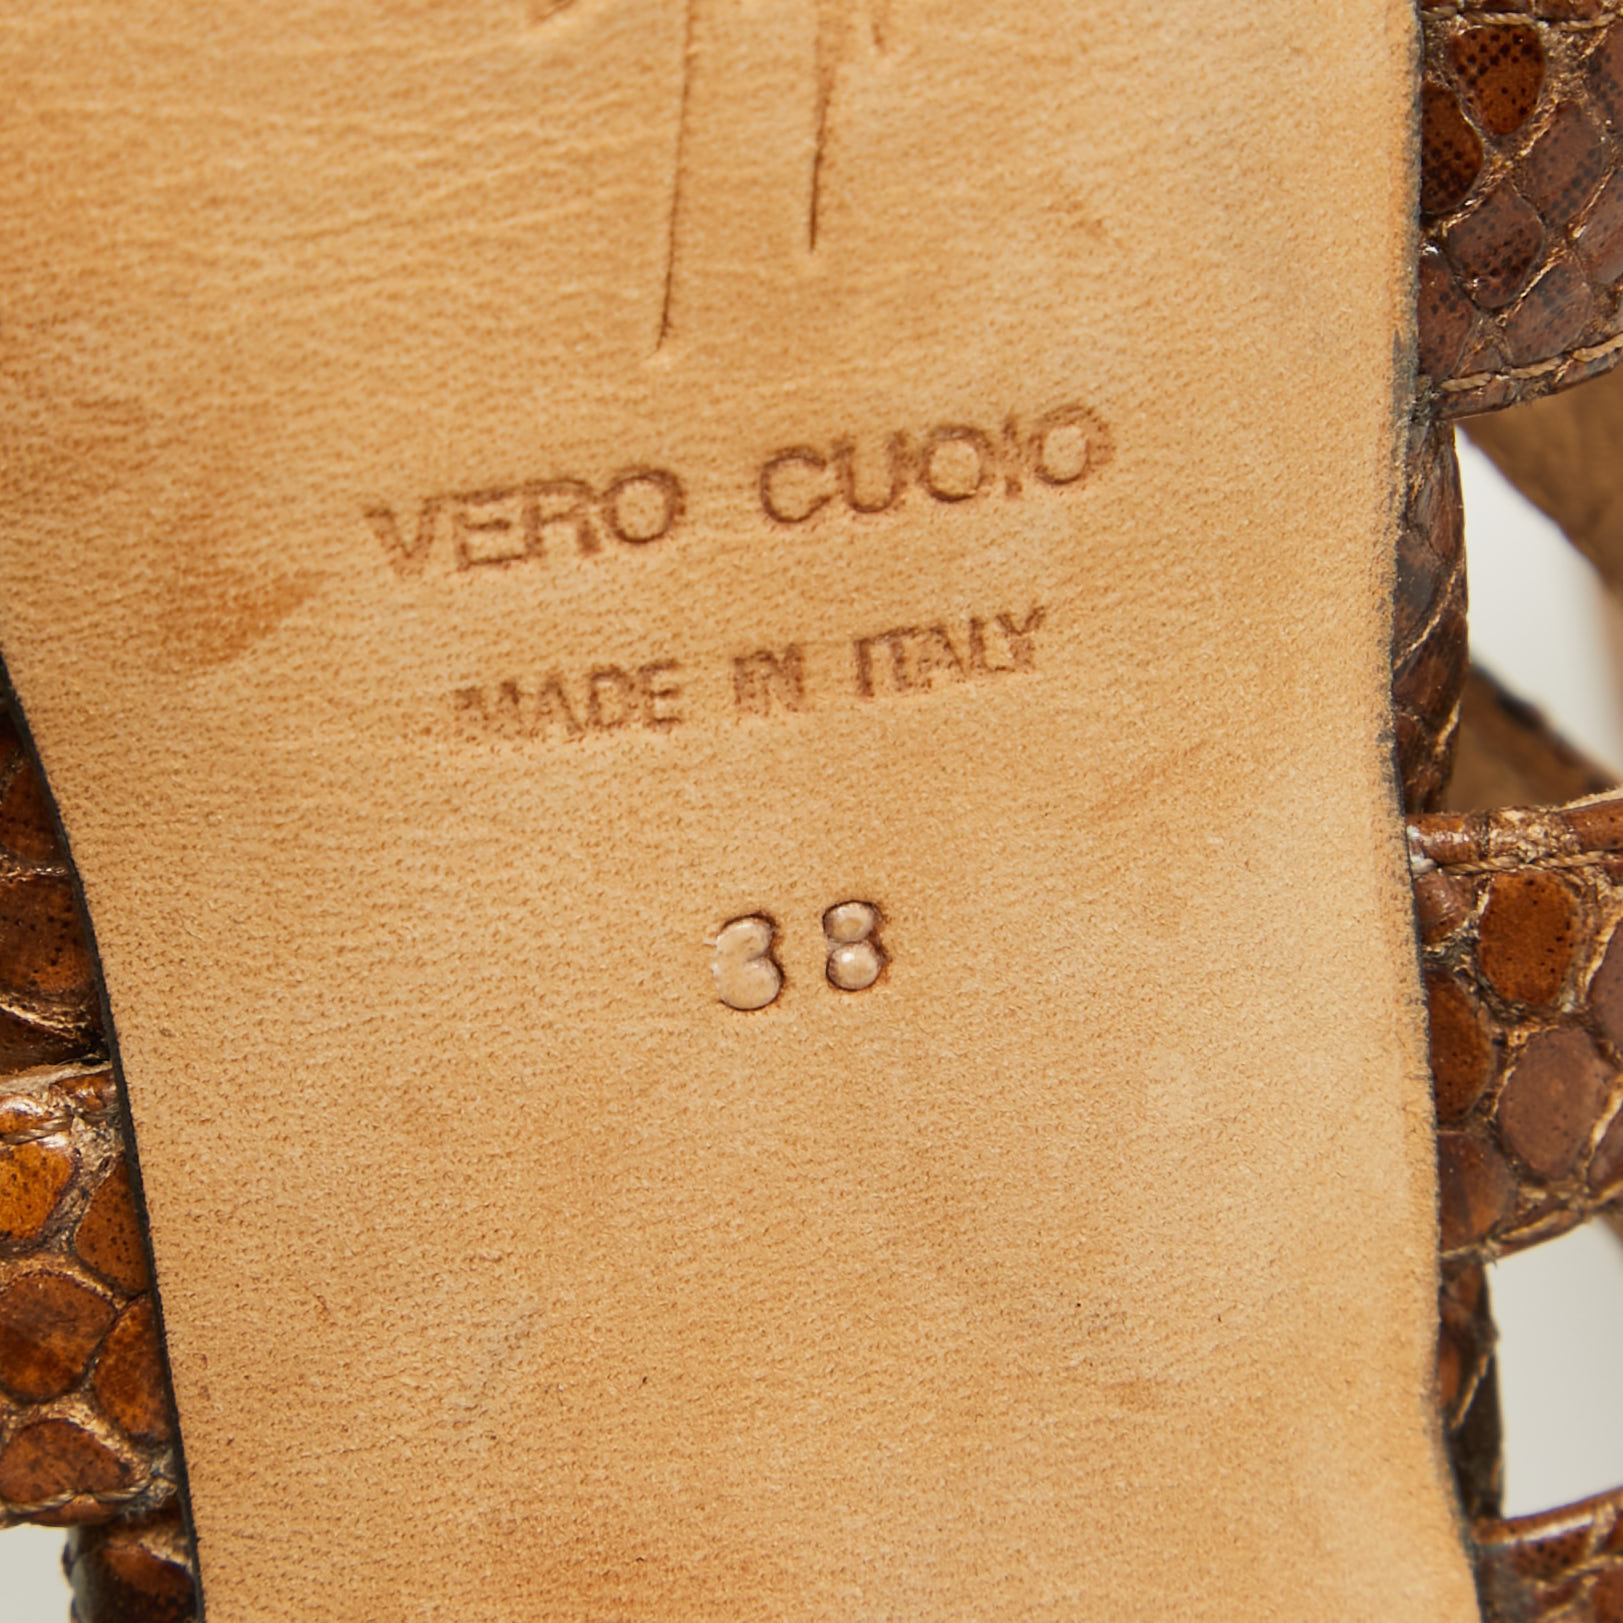 Giuseppe Zanotti Brown/Black Embossed Snakeskin Strappy Sandals Size 38